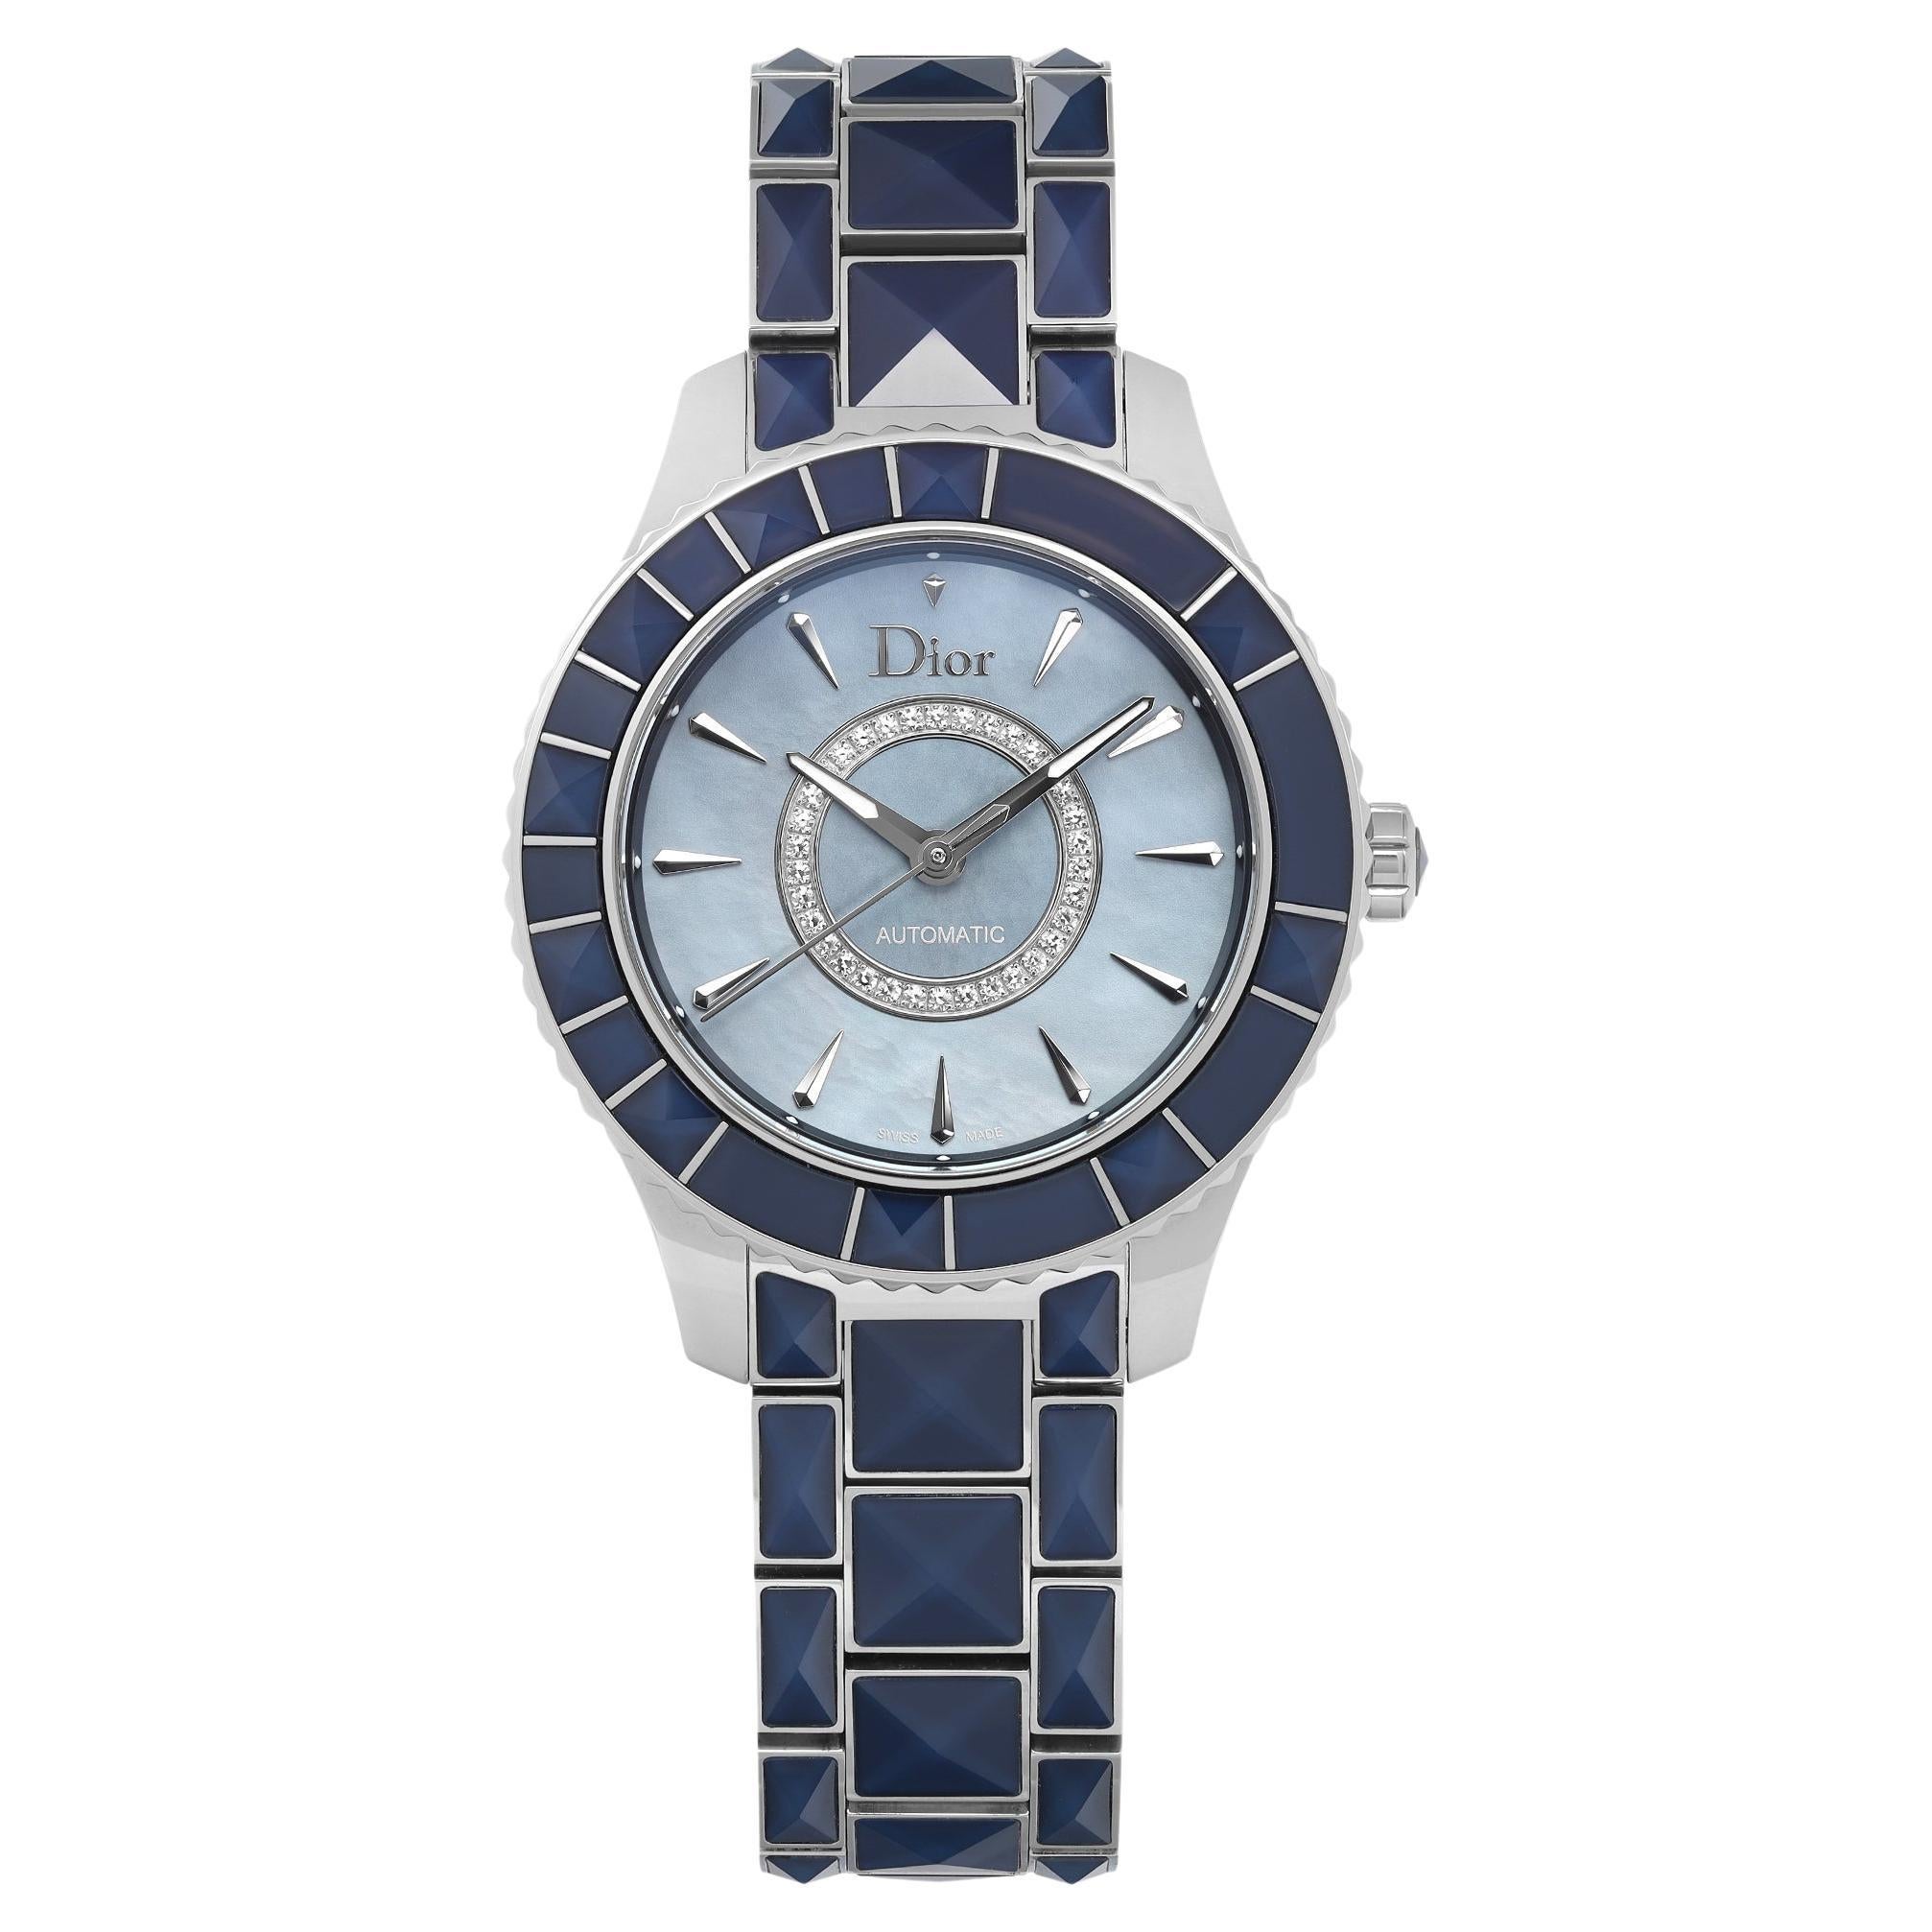 Christian Dior Christal Steel Blue MOP Diamond Dial Automatic Watch CD144517M001